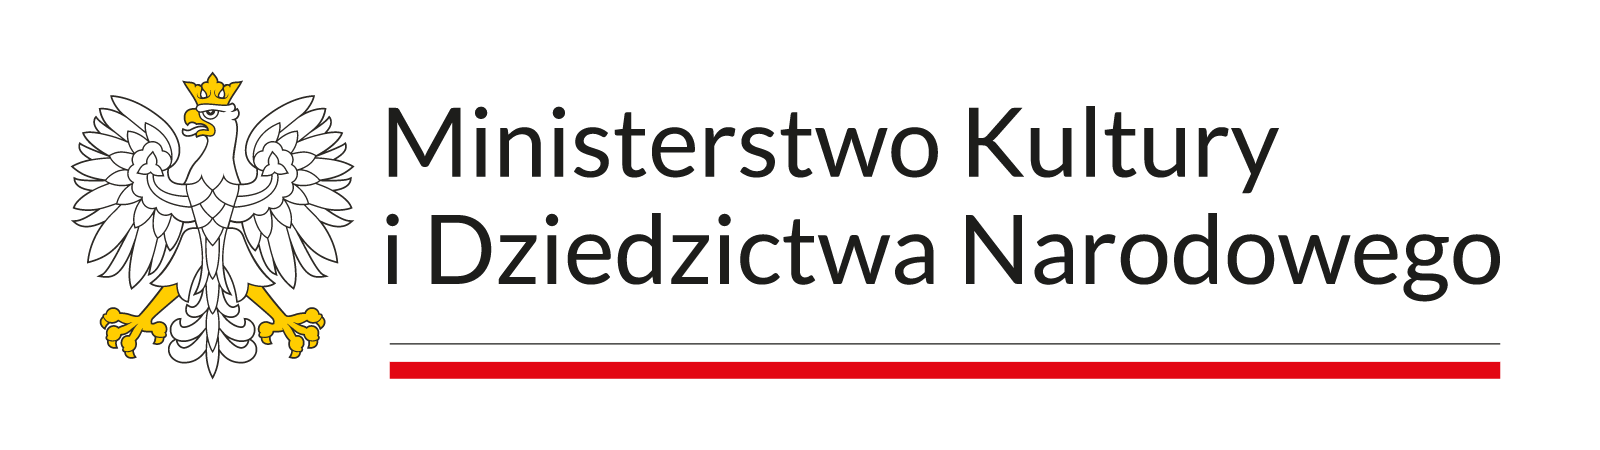 nowe logo ministerstwa